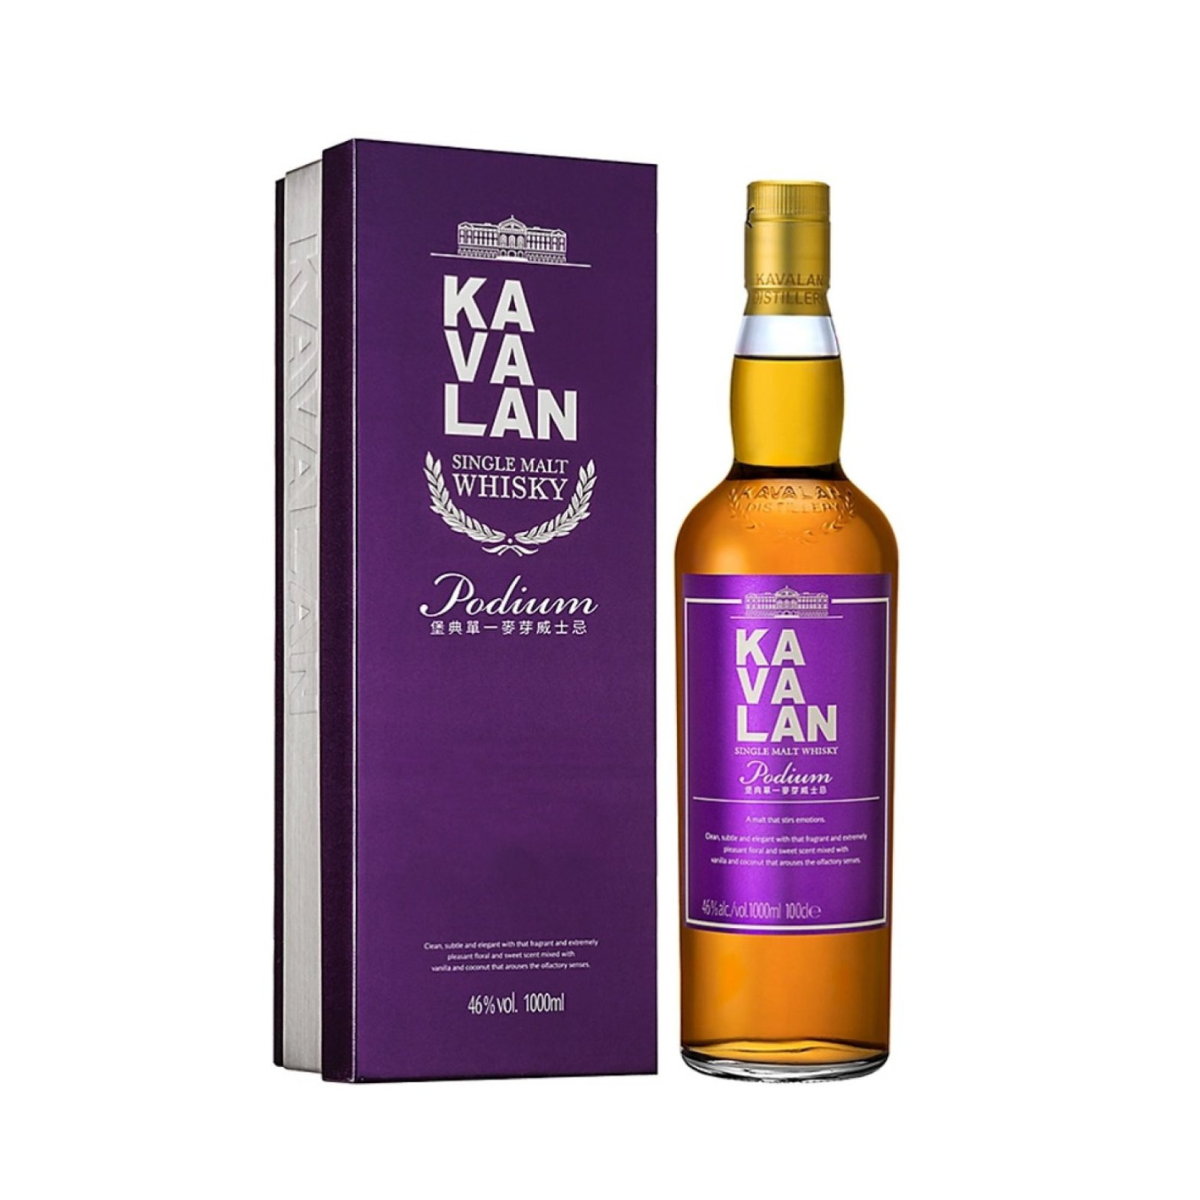 Kavalan Podium 噶瑪蘭堡典單一麥芽威士忌 1000ml